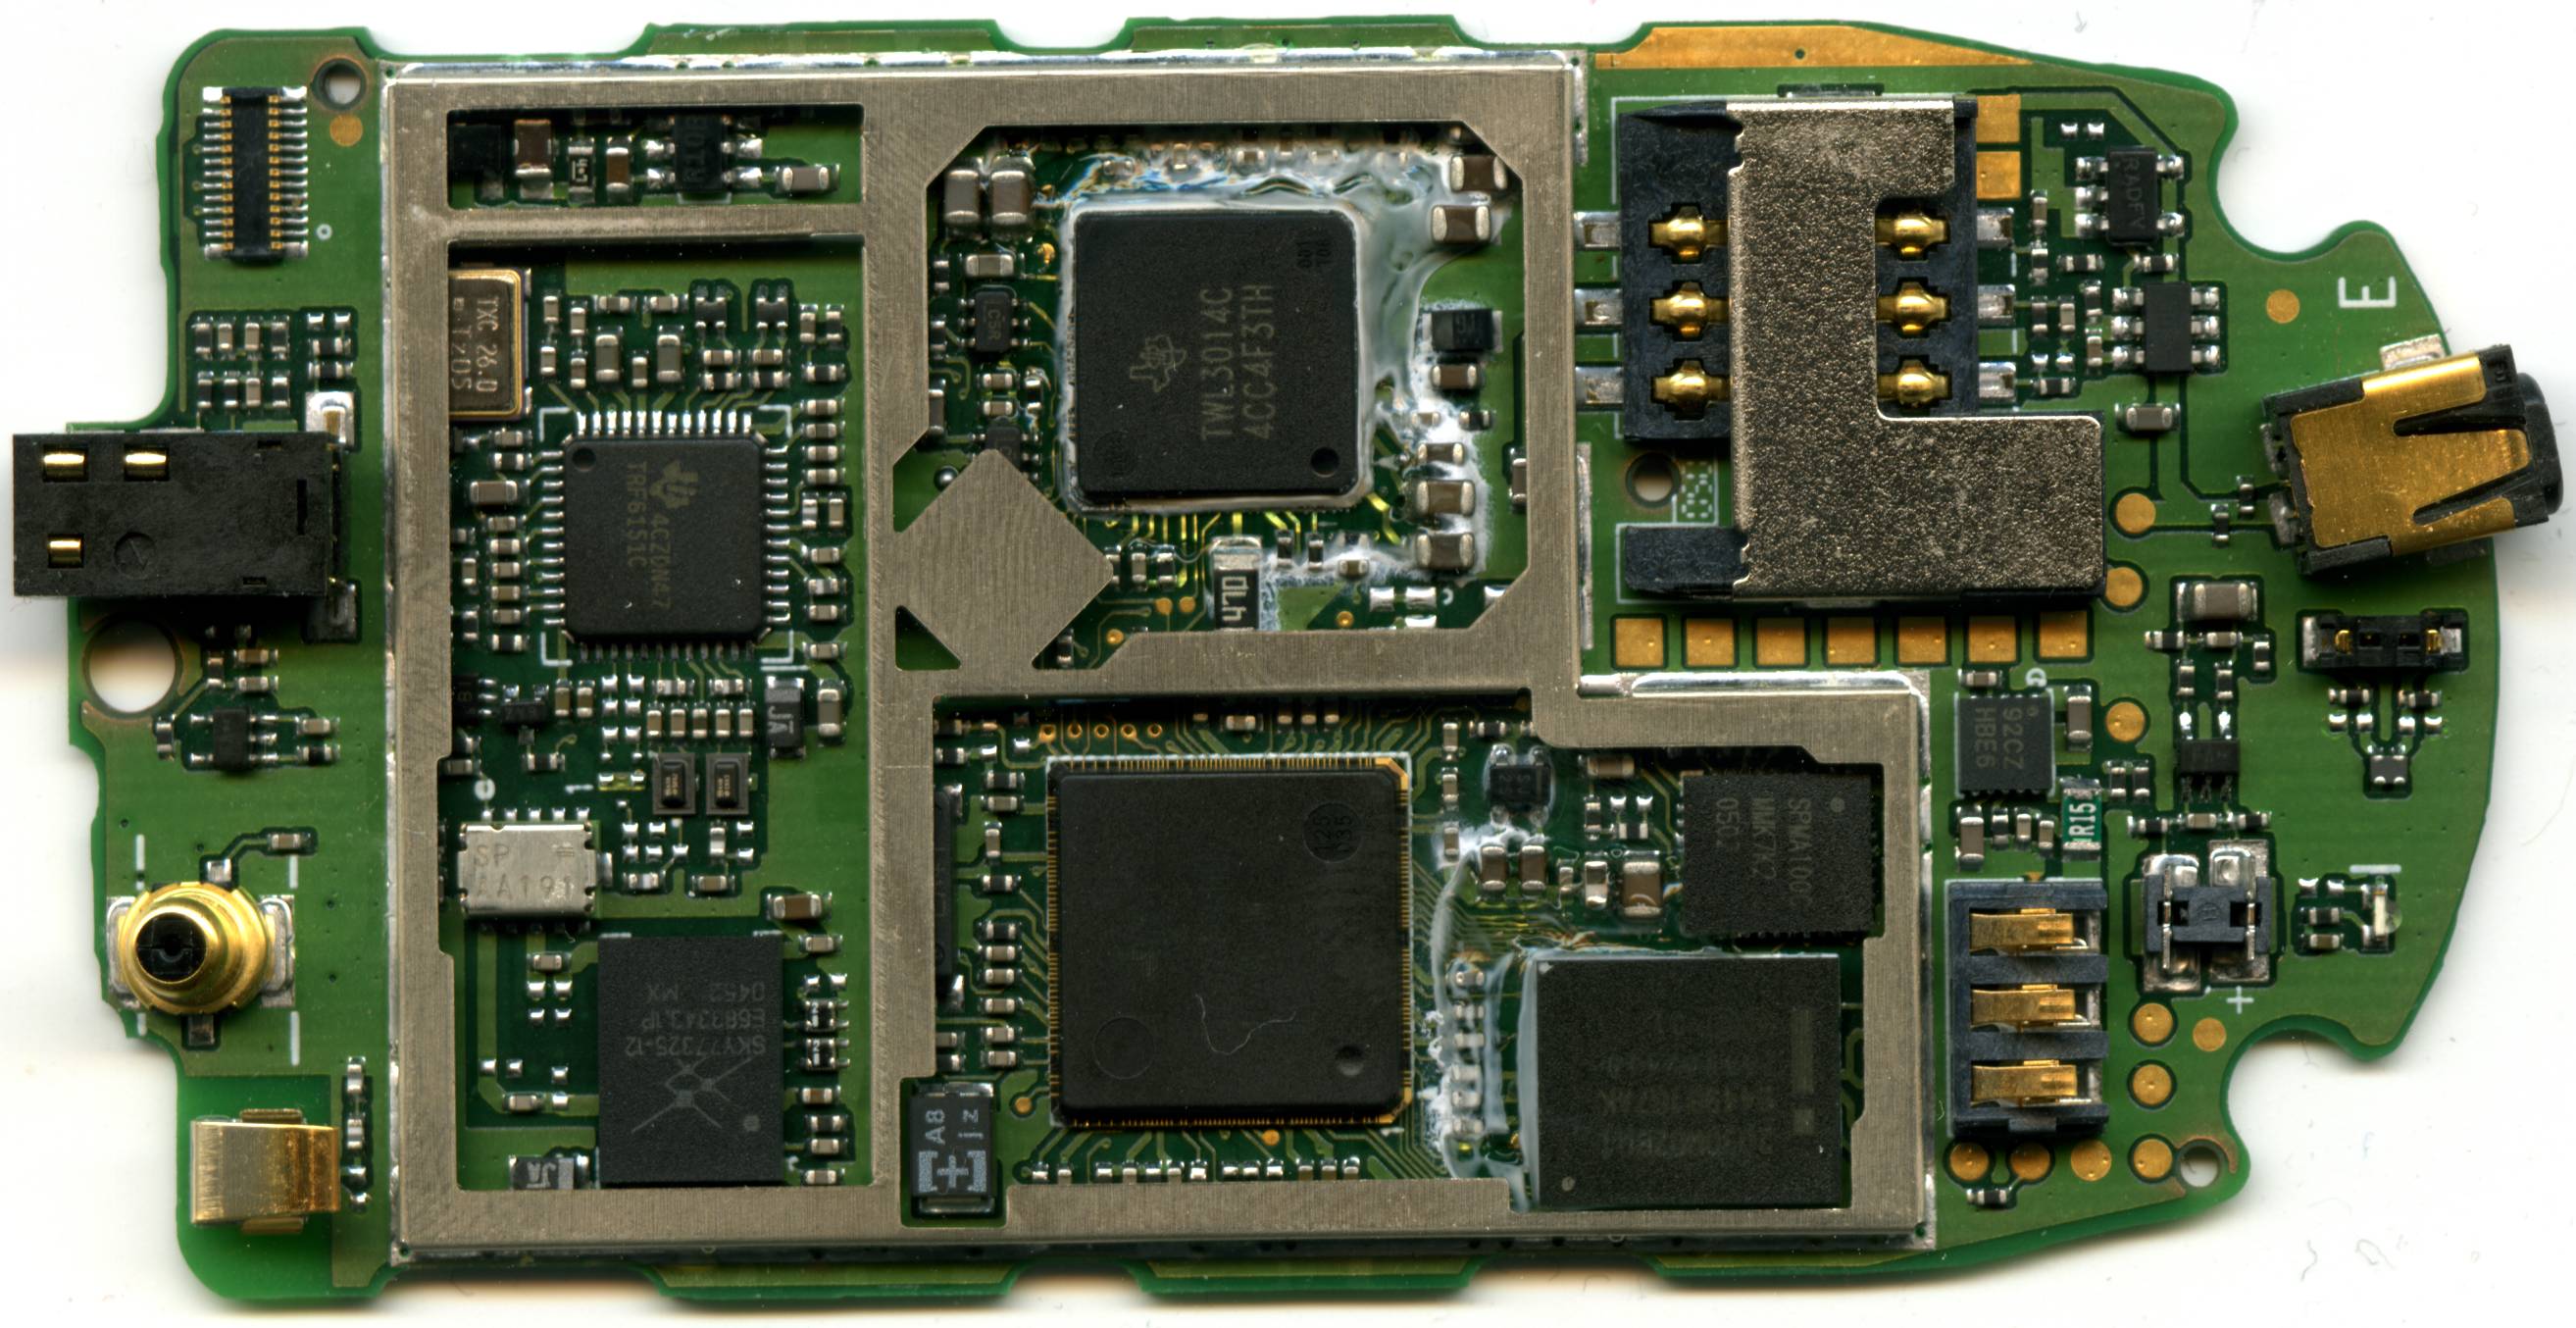 PCB scan of the Motorola V171